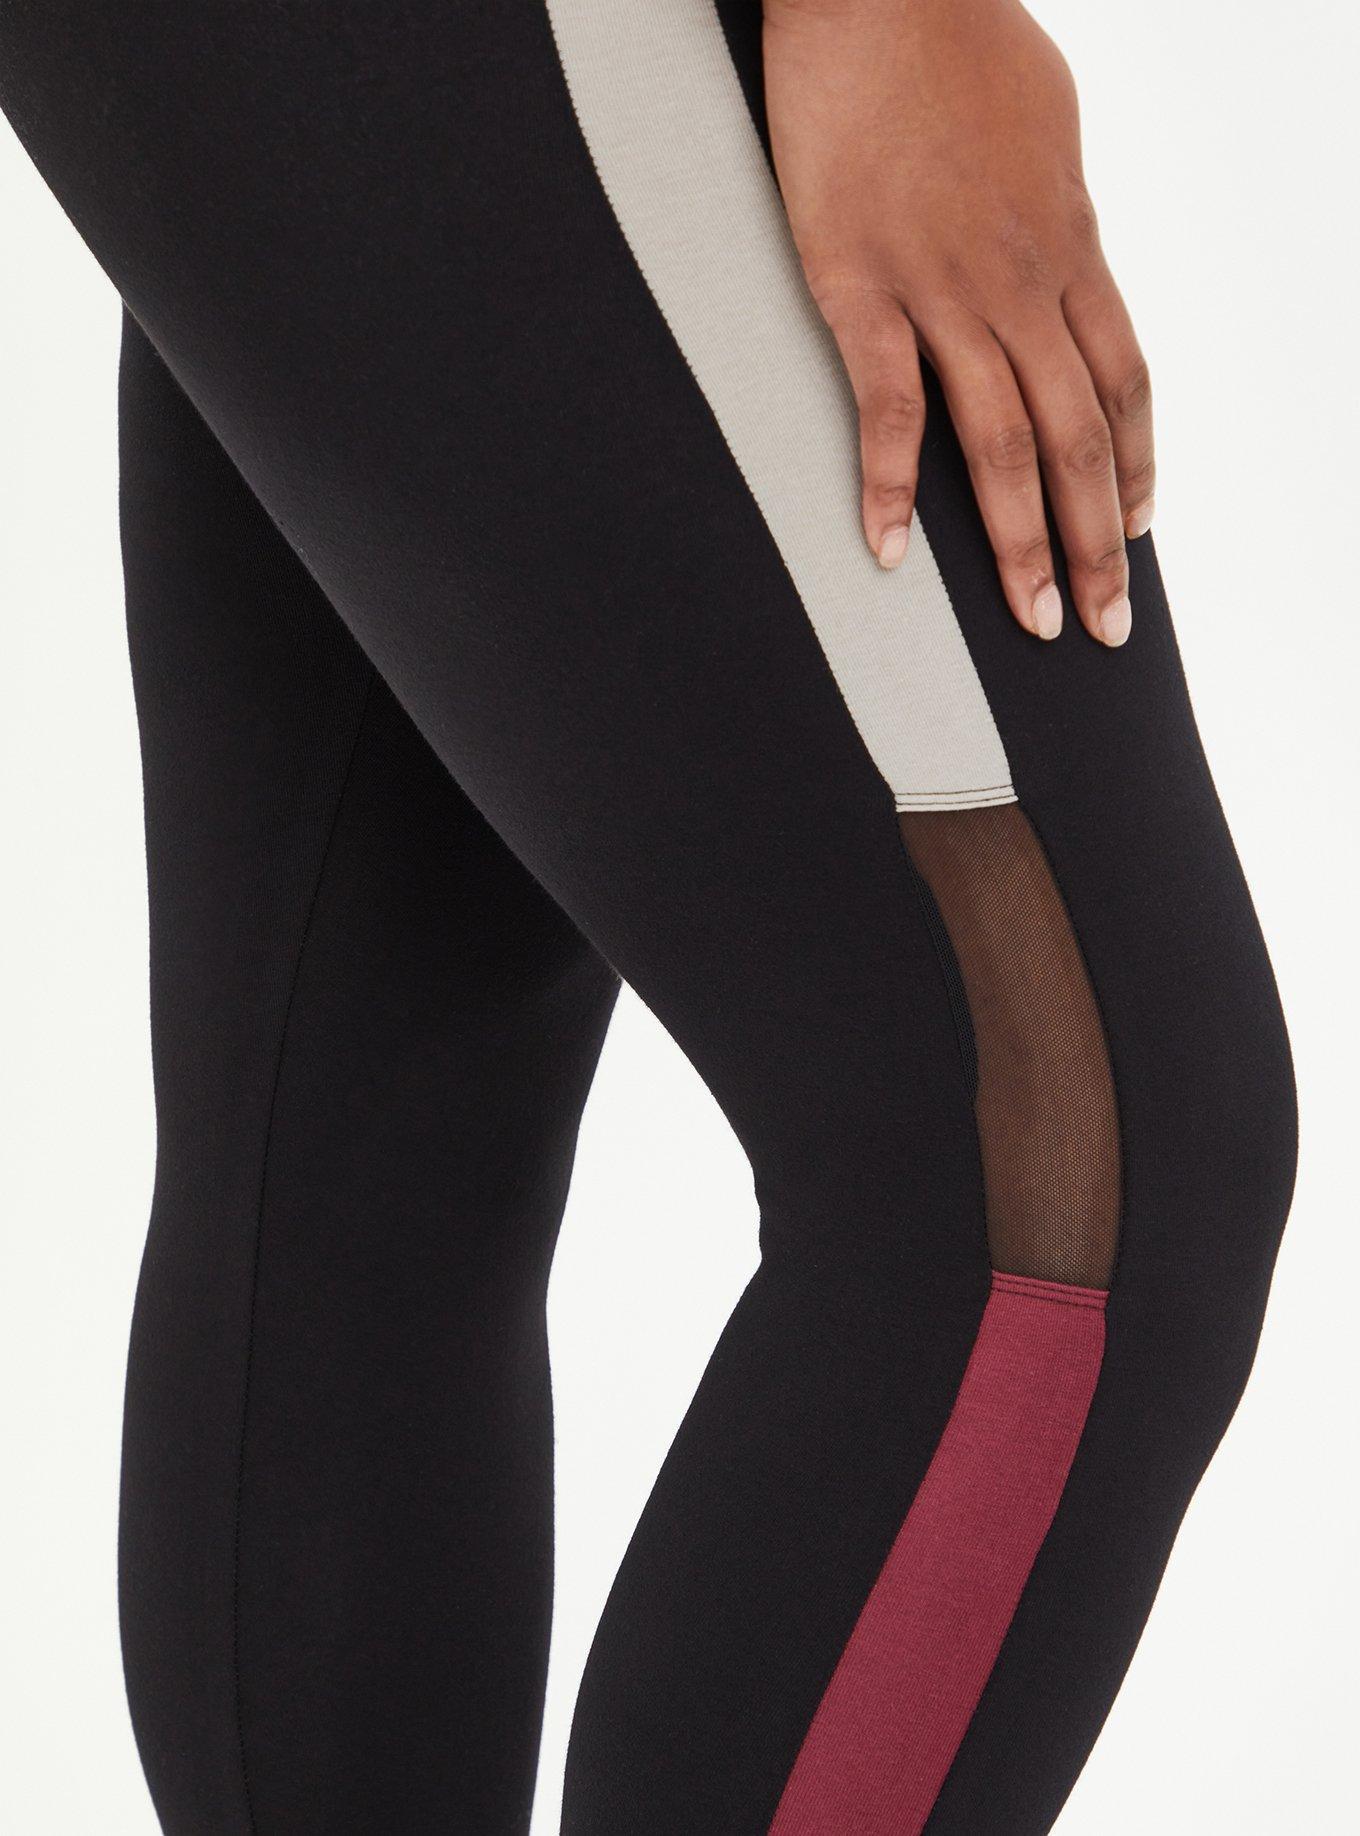 Sheer Mesh Panel Colorblock Legging  Outfits with leggings, Color block  leggings, Legging